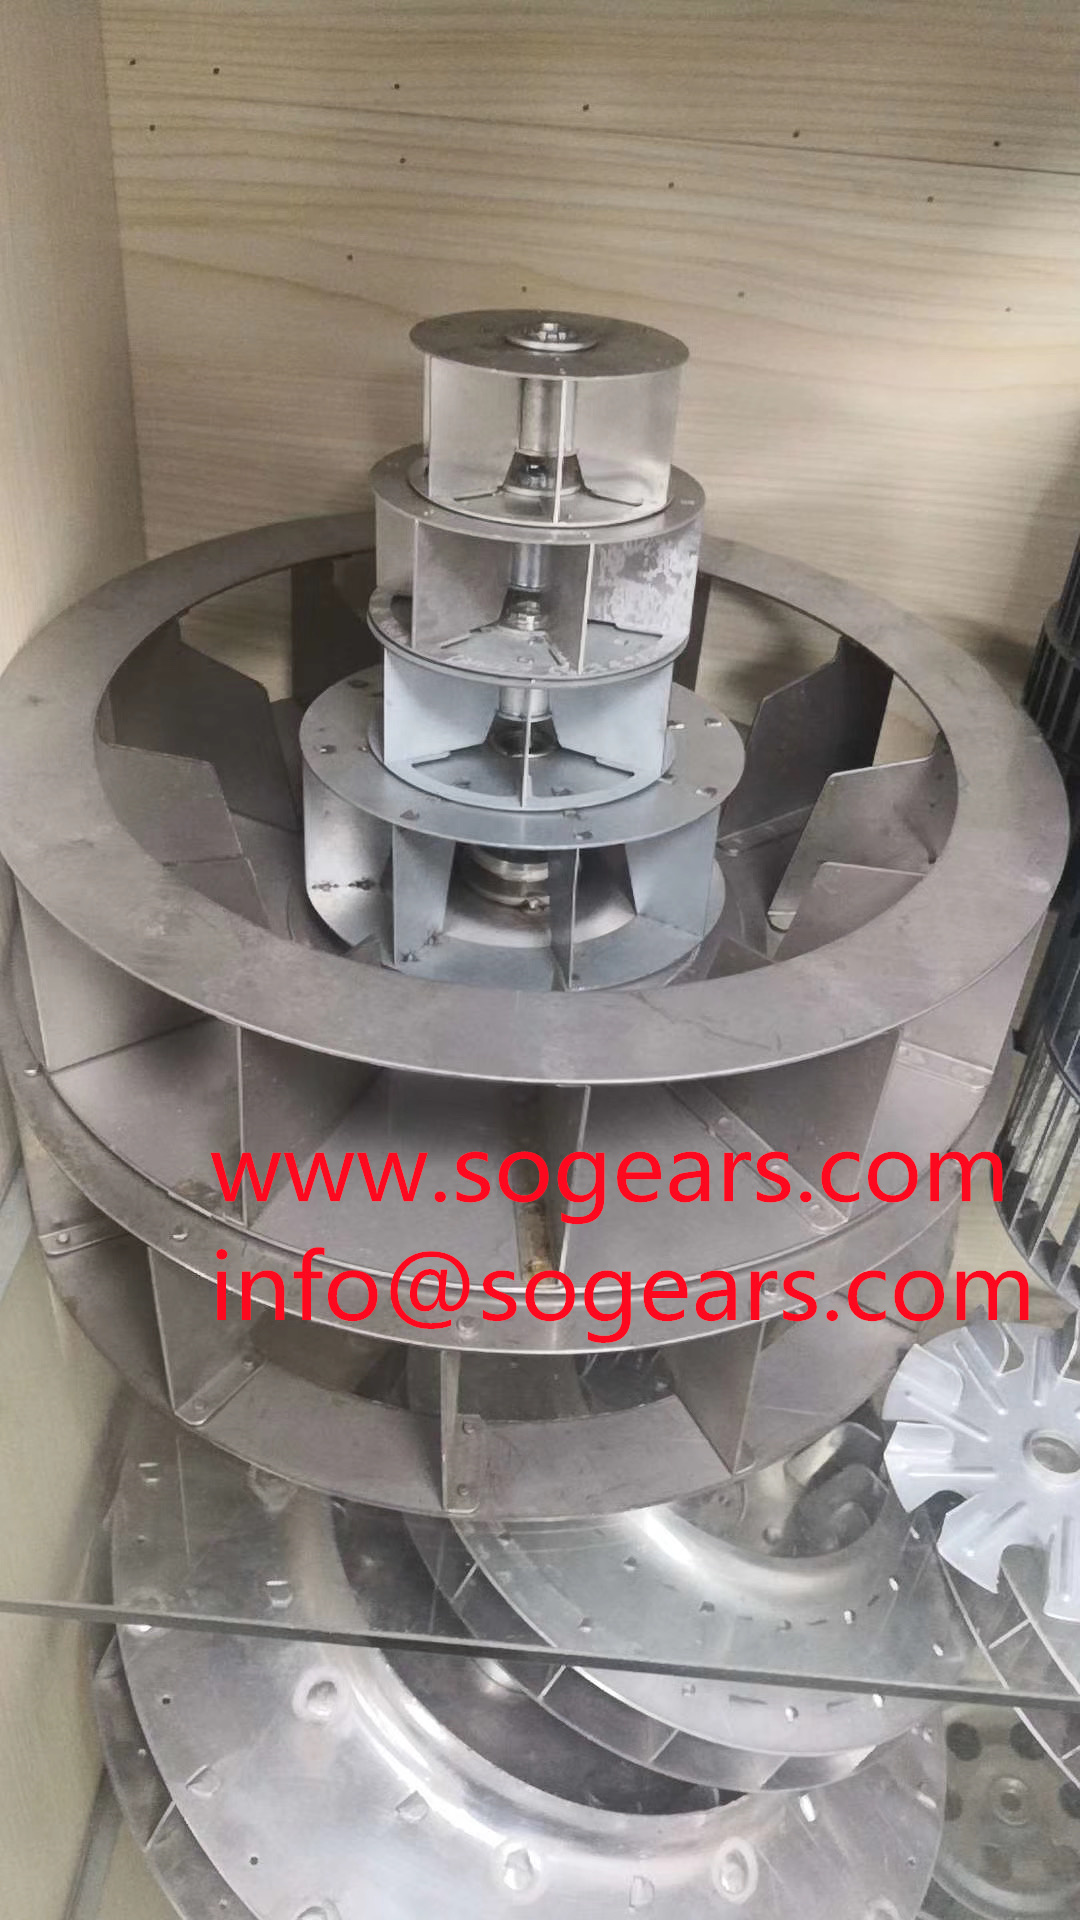 Weiguang fan motor universal motor manufacturer